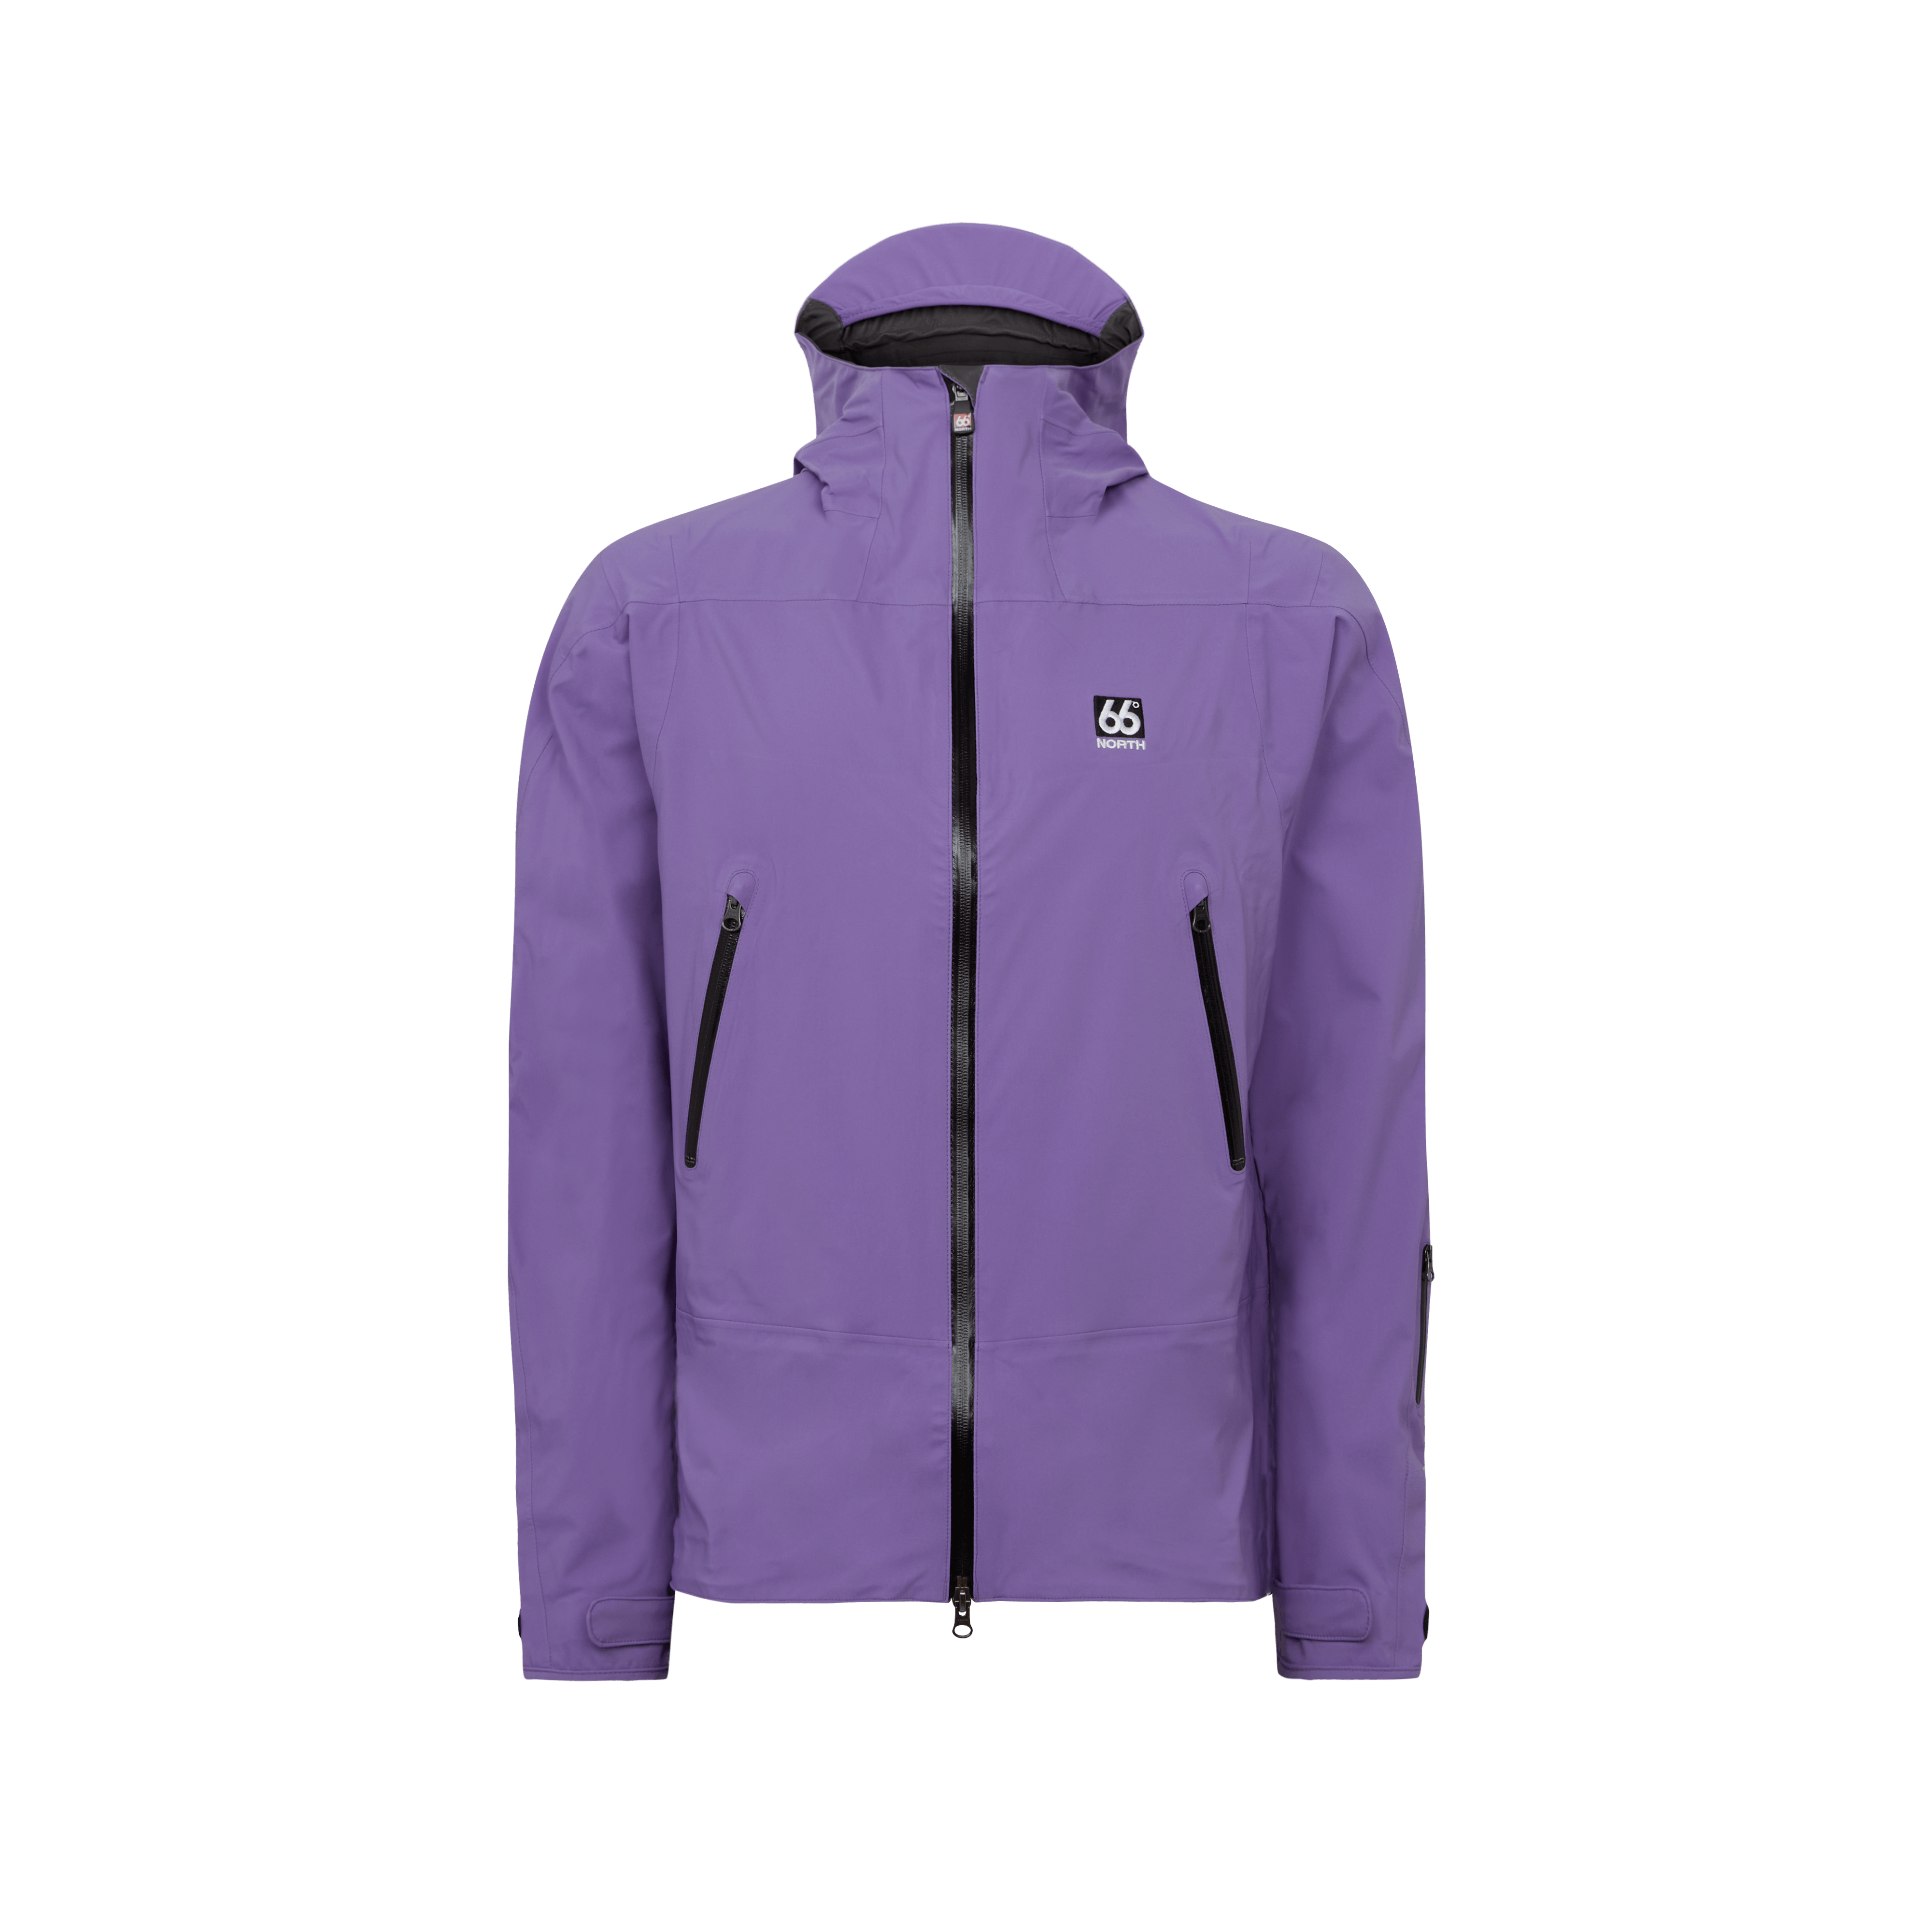 66 North Men's Snæfell Jackets & Coats